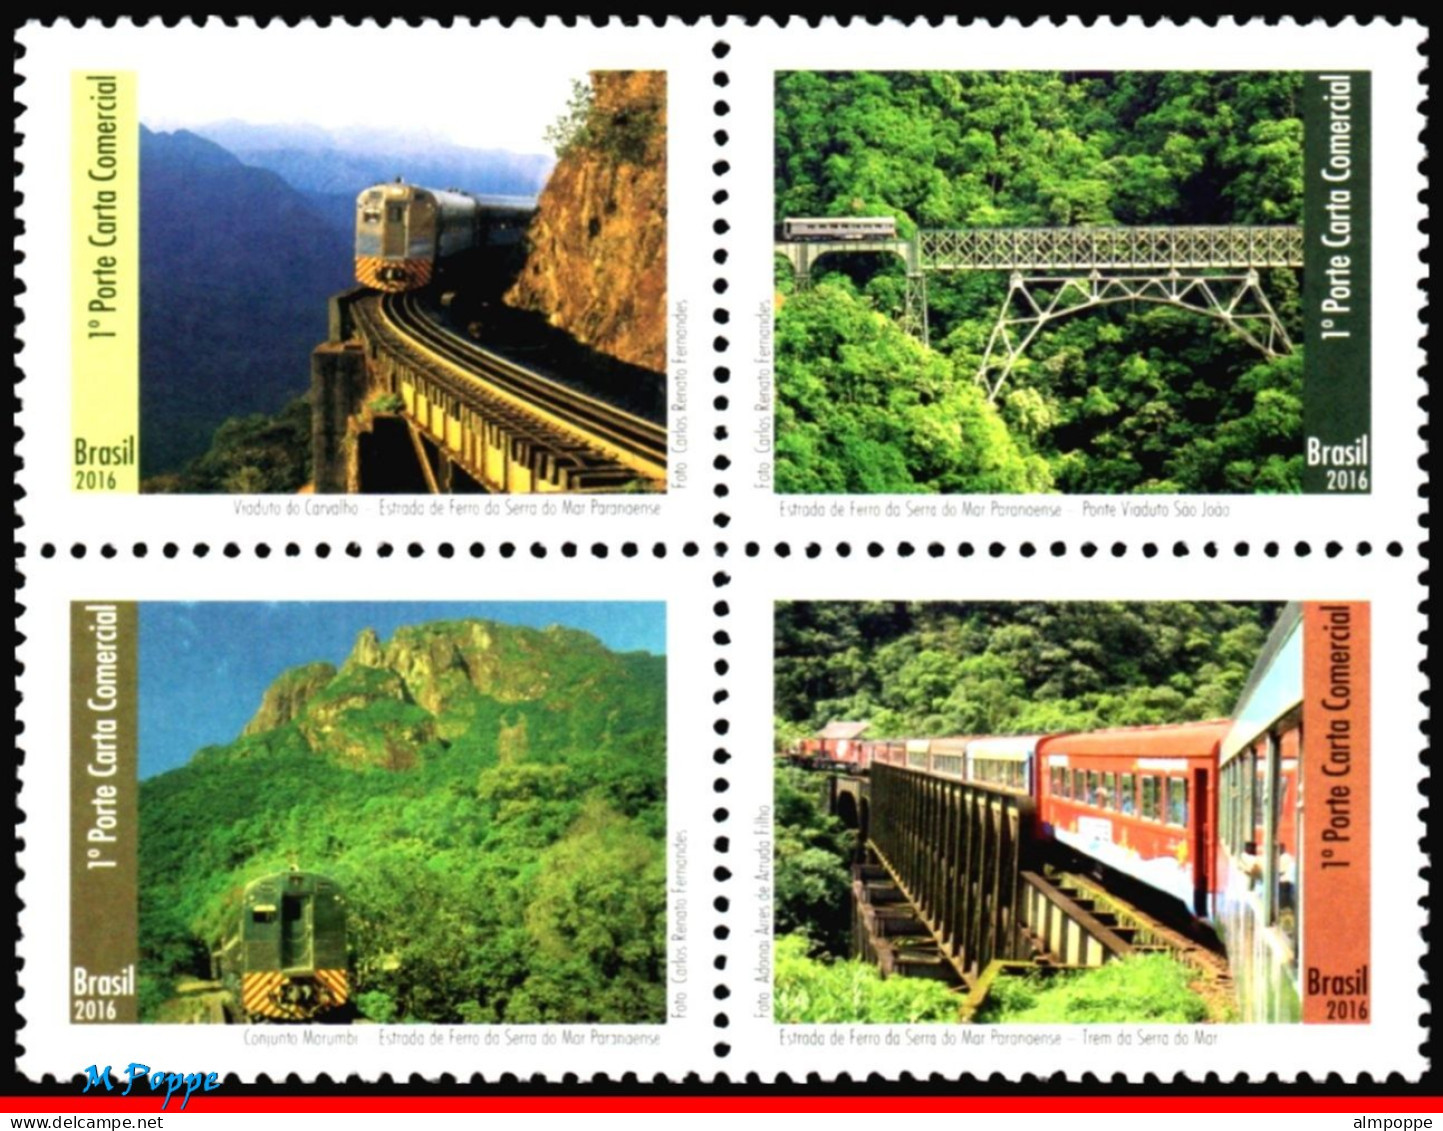 Ref. BR-V2016-12 BRAZIL 2016 - SERRA DO MAR PARANAENSE RAILWAY, BRIDGES, RAILWAYS, TRAINS 4V SET MNH - Unused Stamps